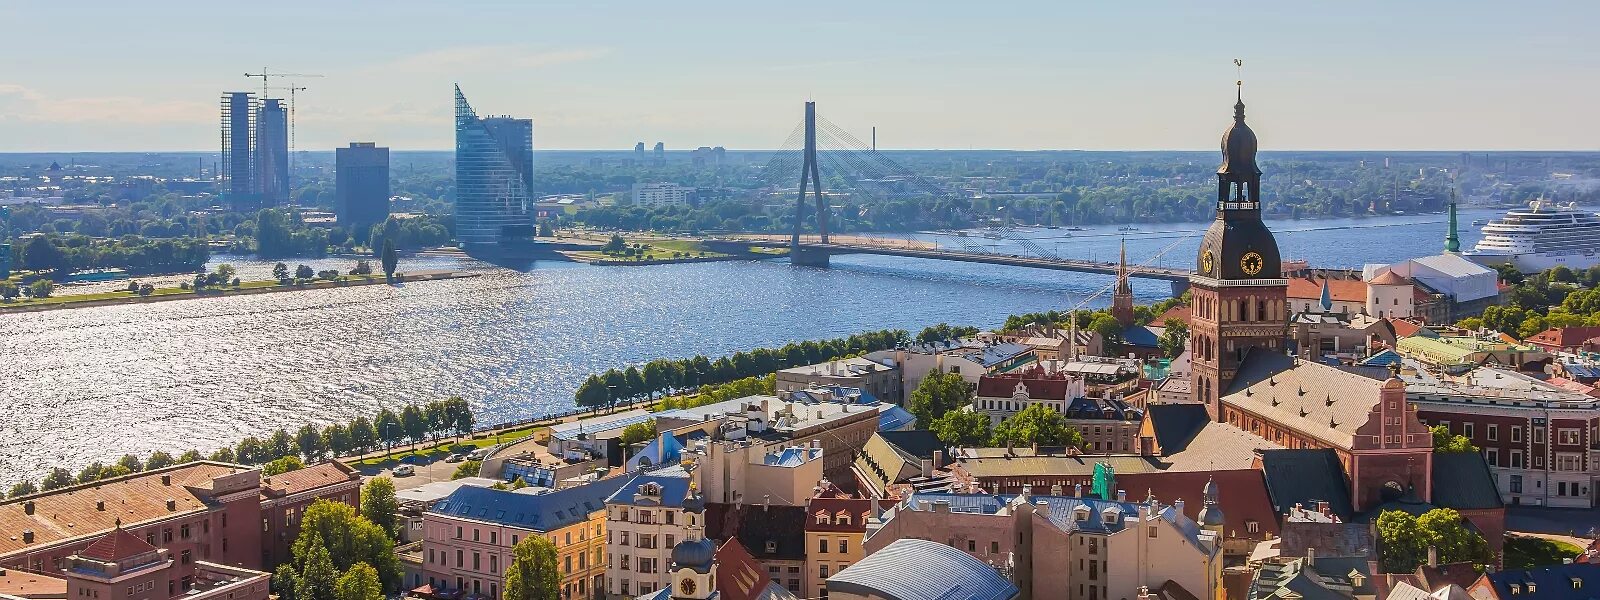 Рига тбилиси. Город Рига Латвия. Латвия панорама. Исторический центр Риги Латвия. Рига левый берег.